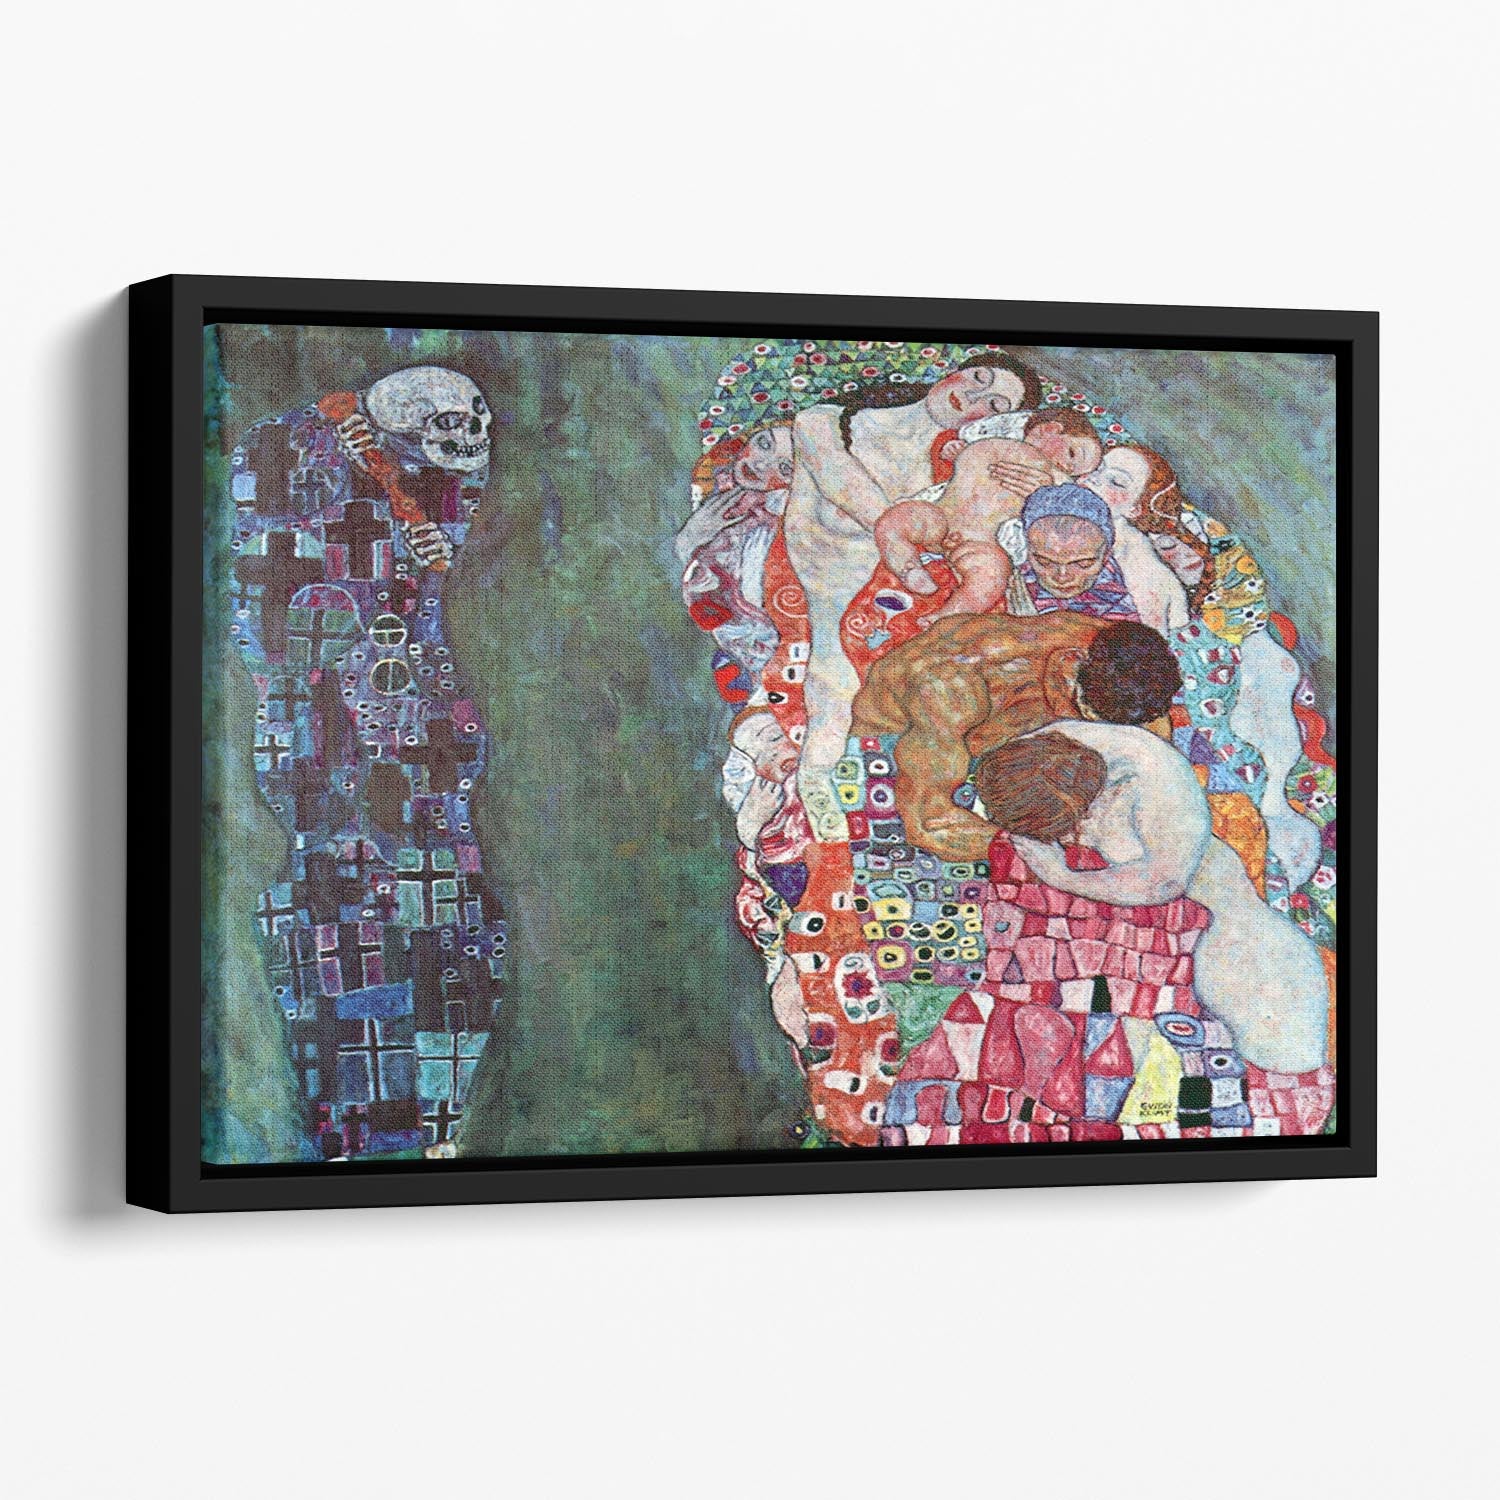 Death and Life by Klimt Floating Framed Canvas